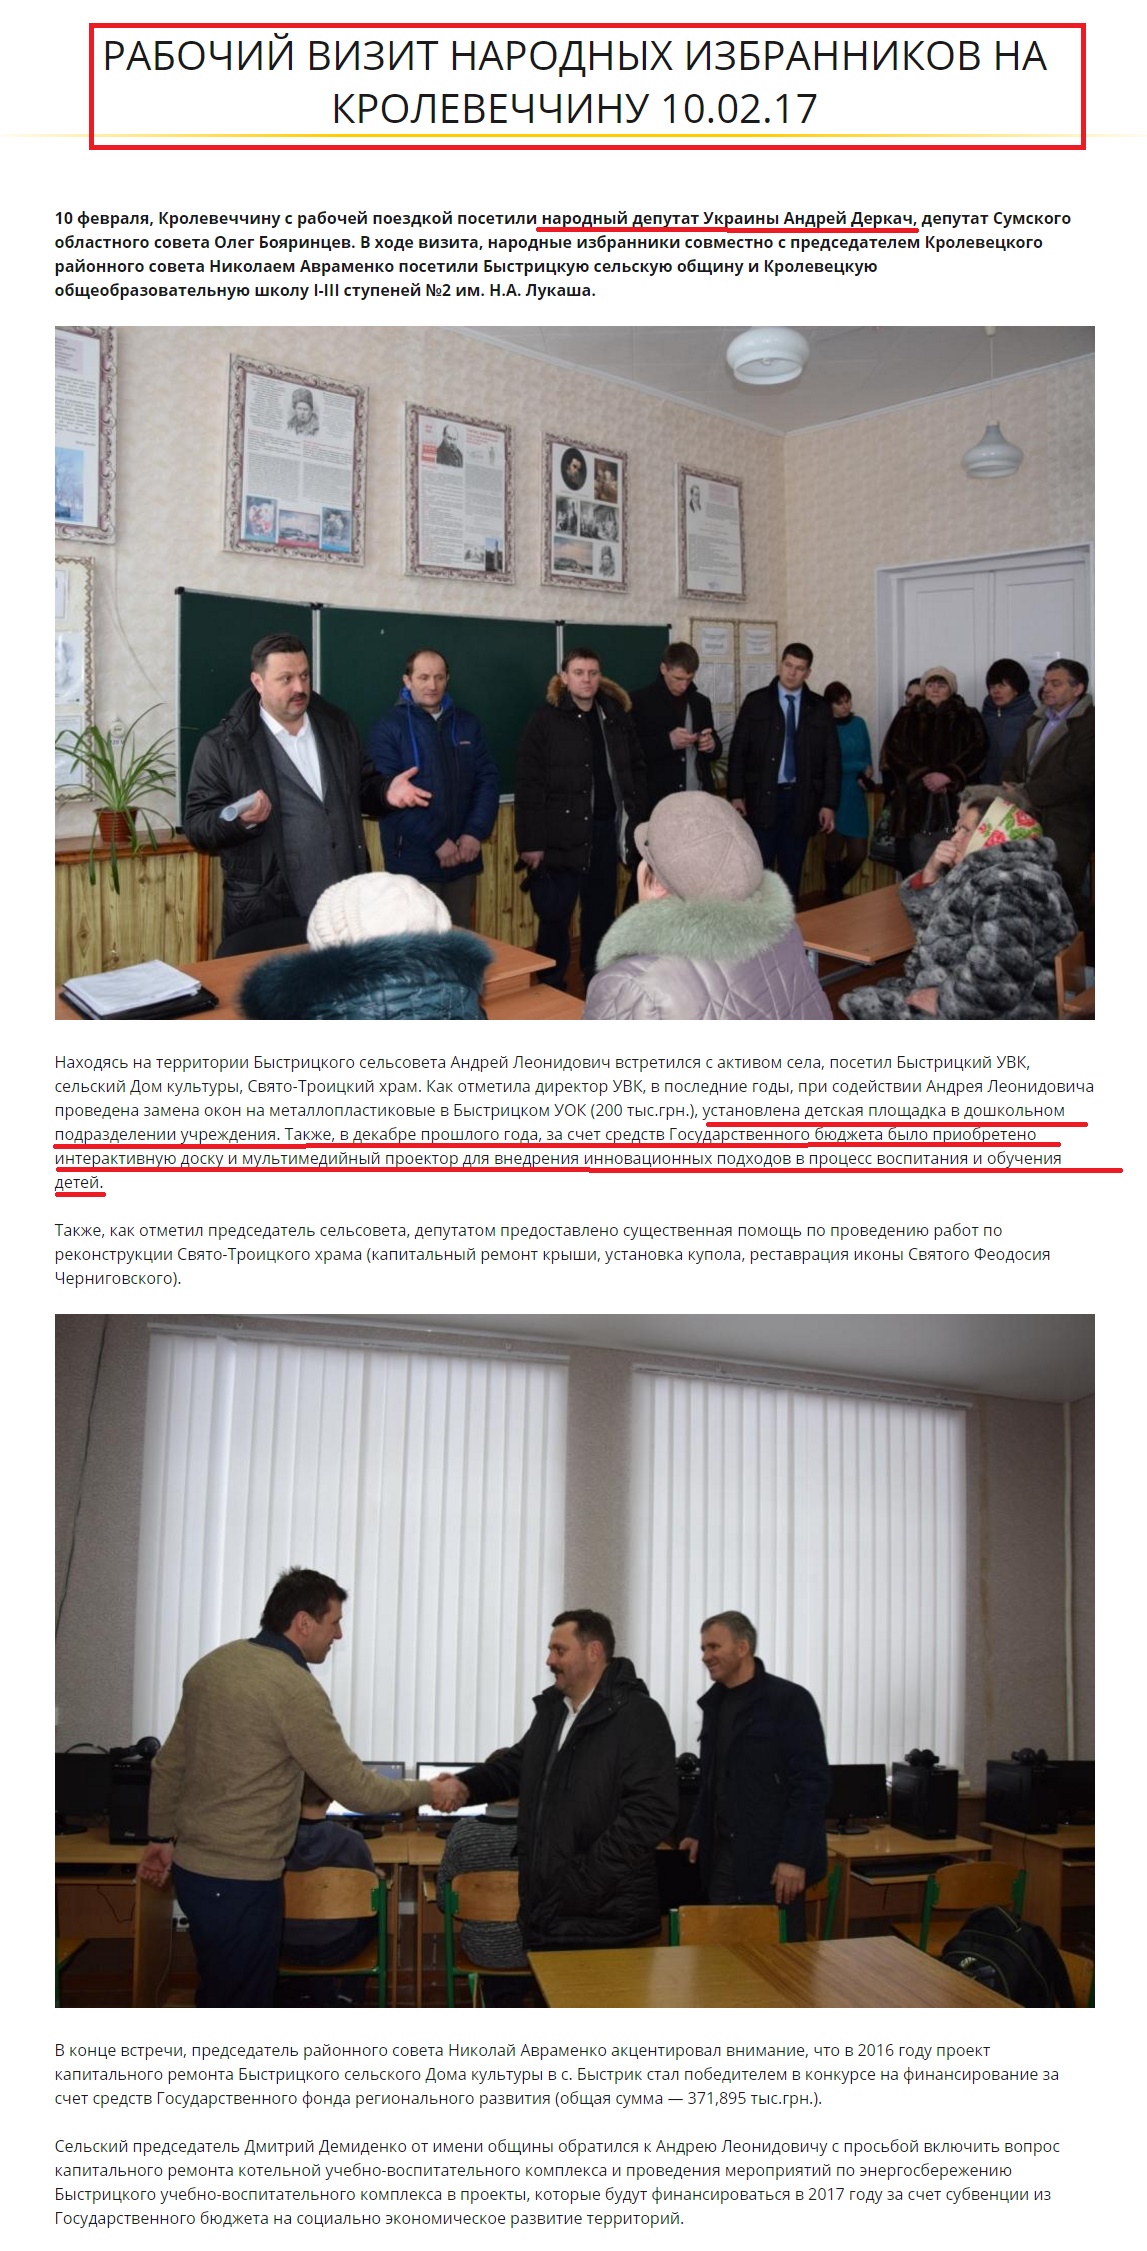 http://derkach.com.ua/mass-media/rabochij-vizit-narodnyh-izbrannikov-na-krolevechchinu-10-02-17/